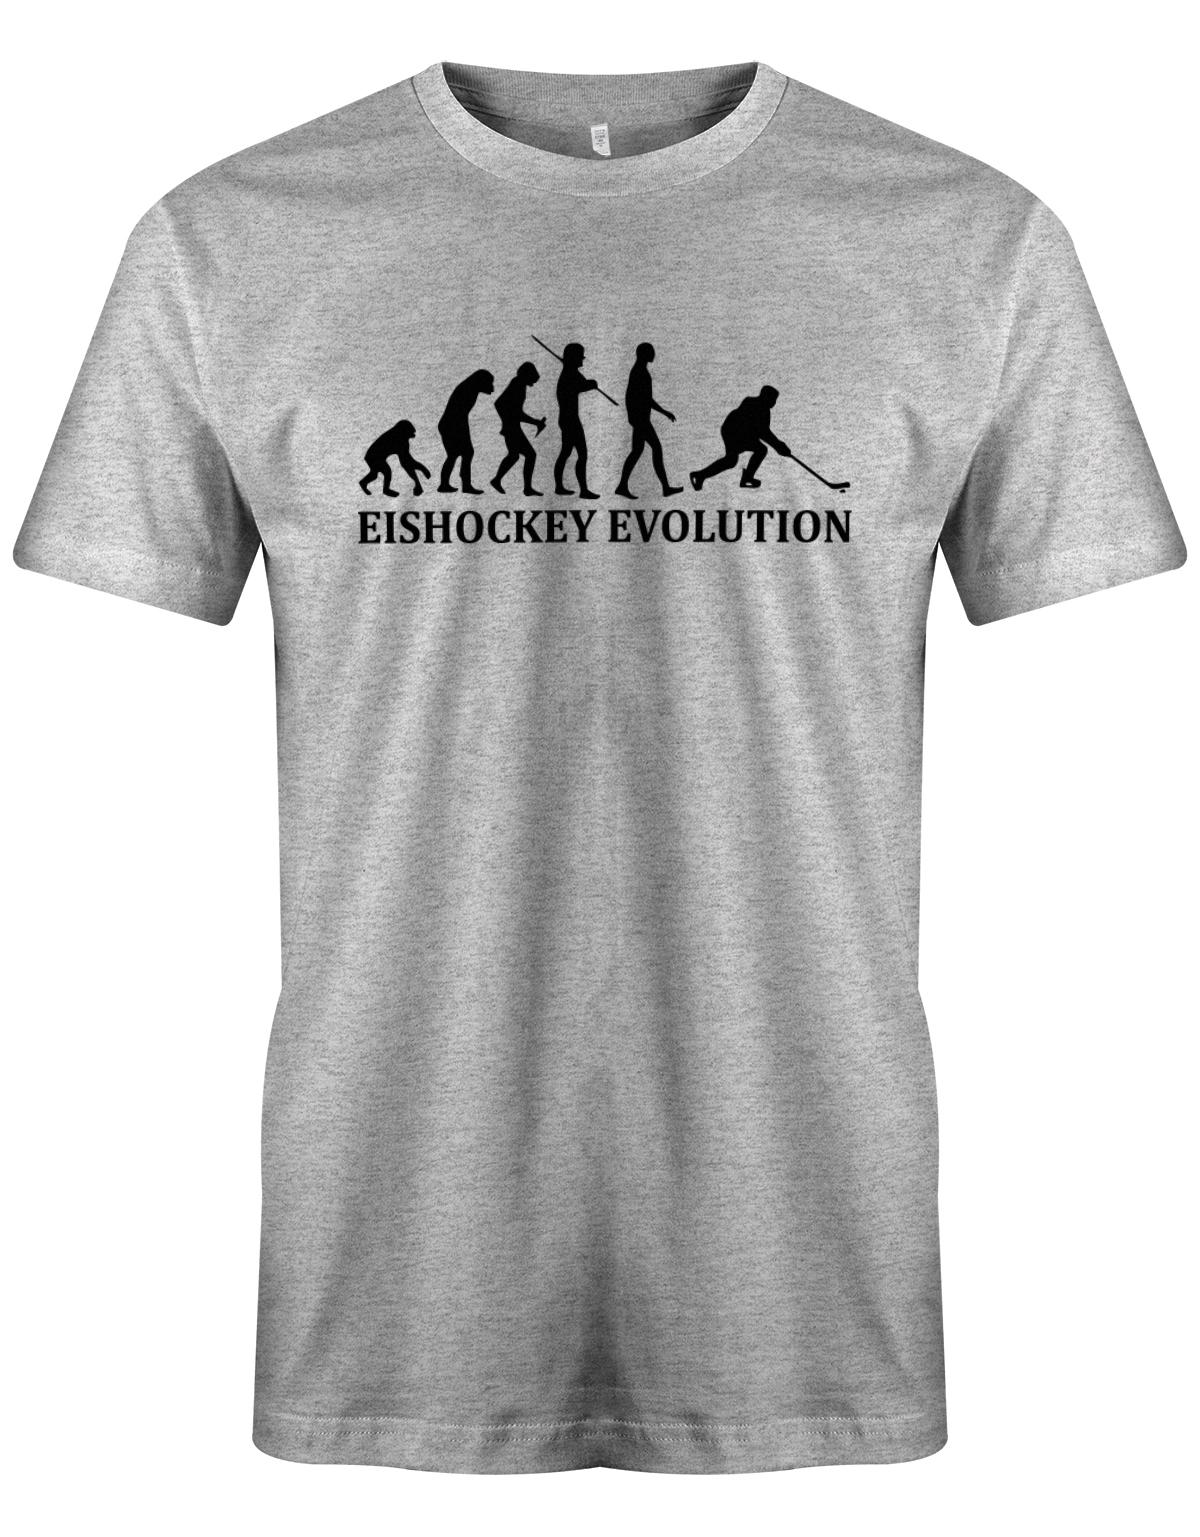 Eishockey-Evolution-Herren-Shirt-Grau